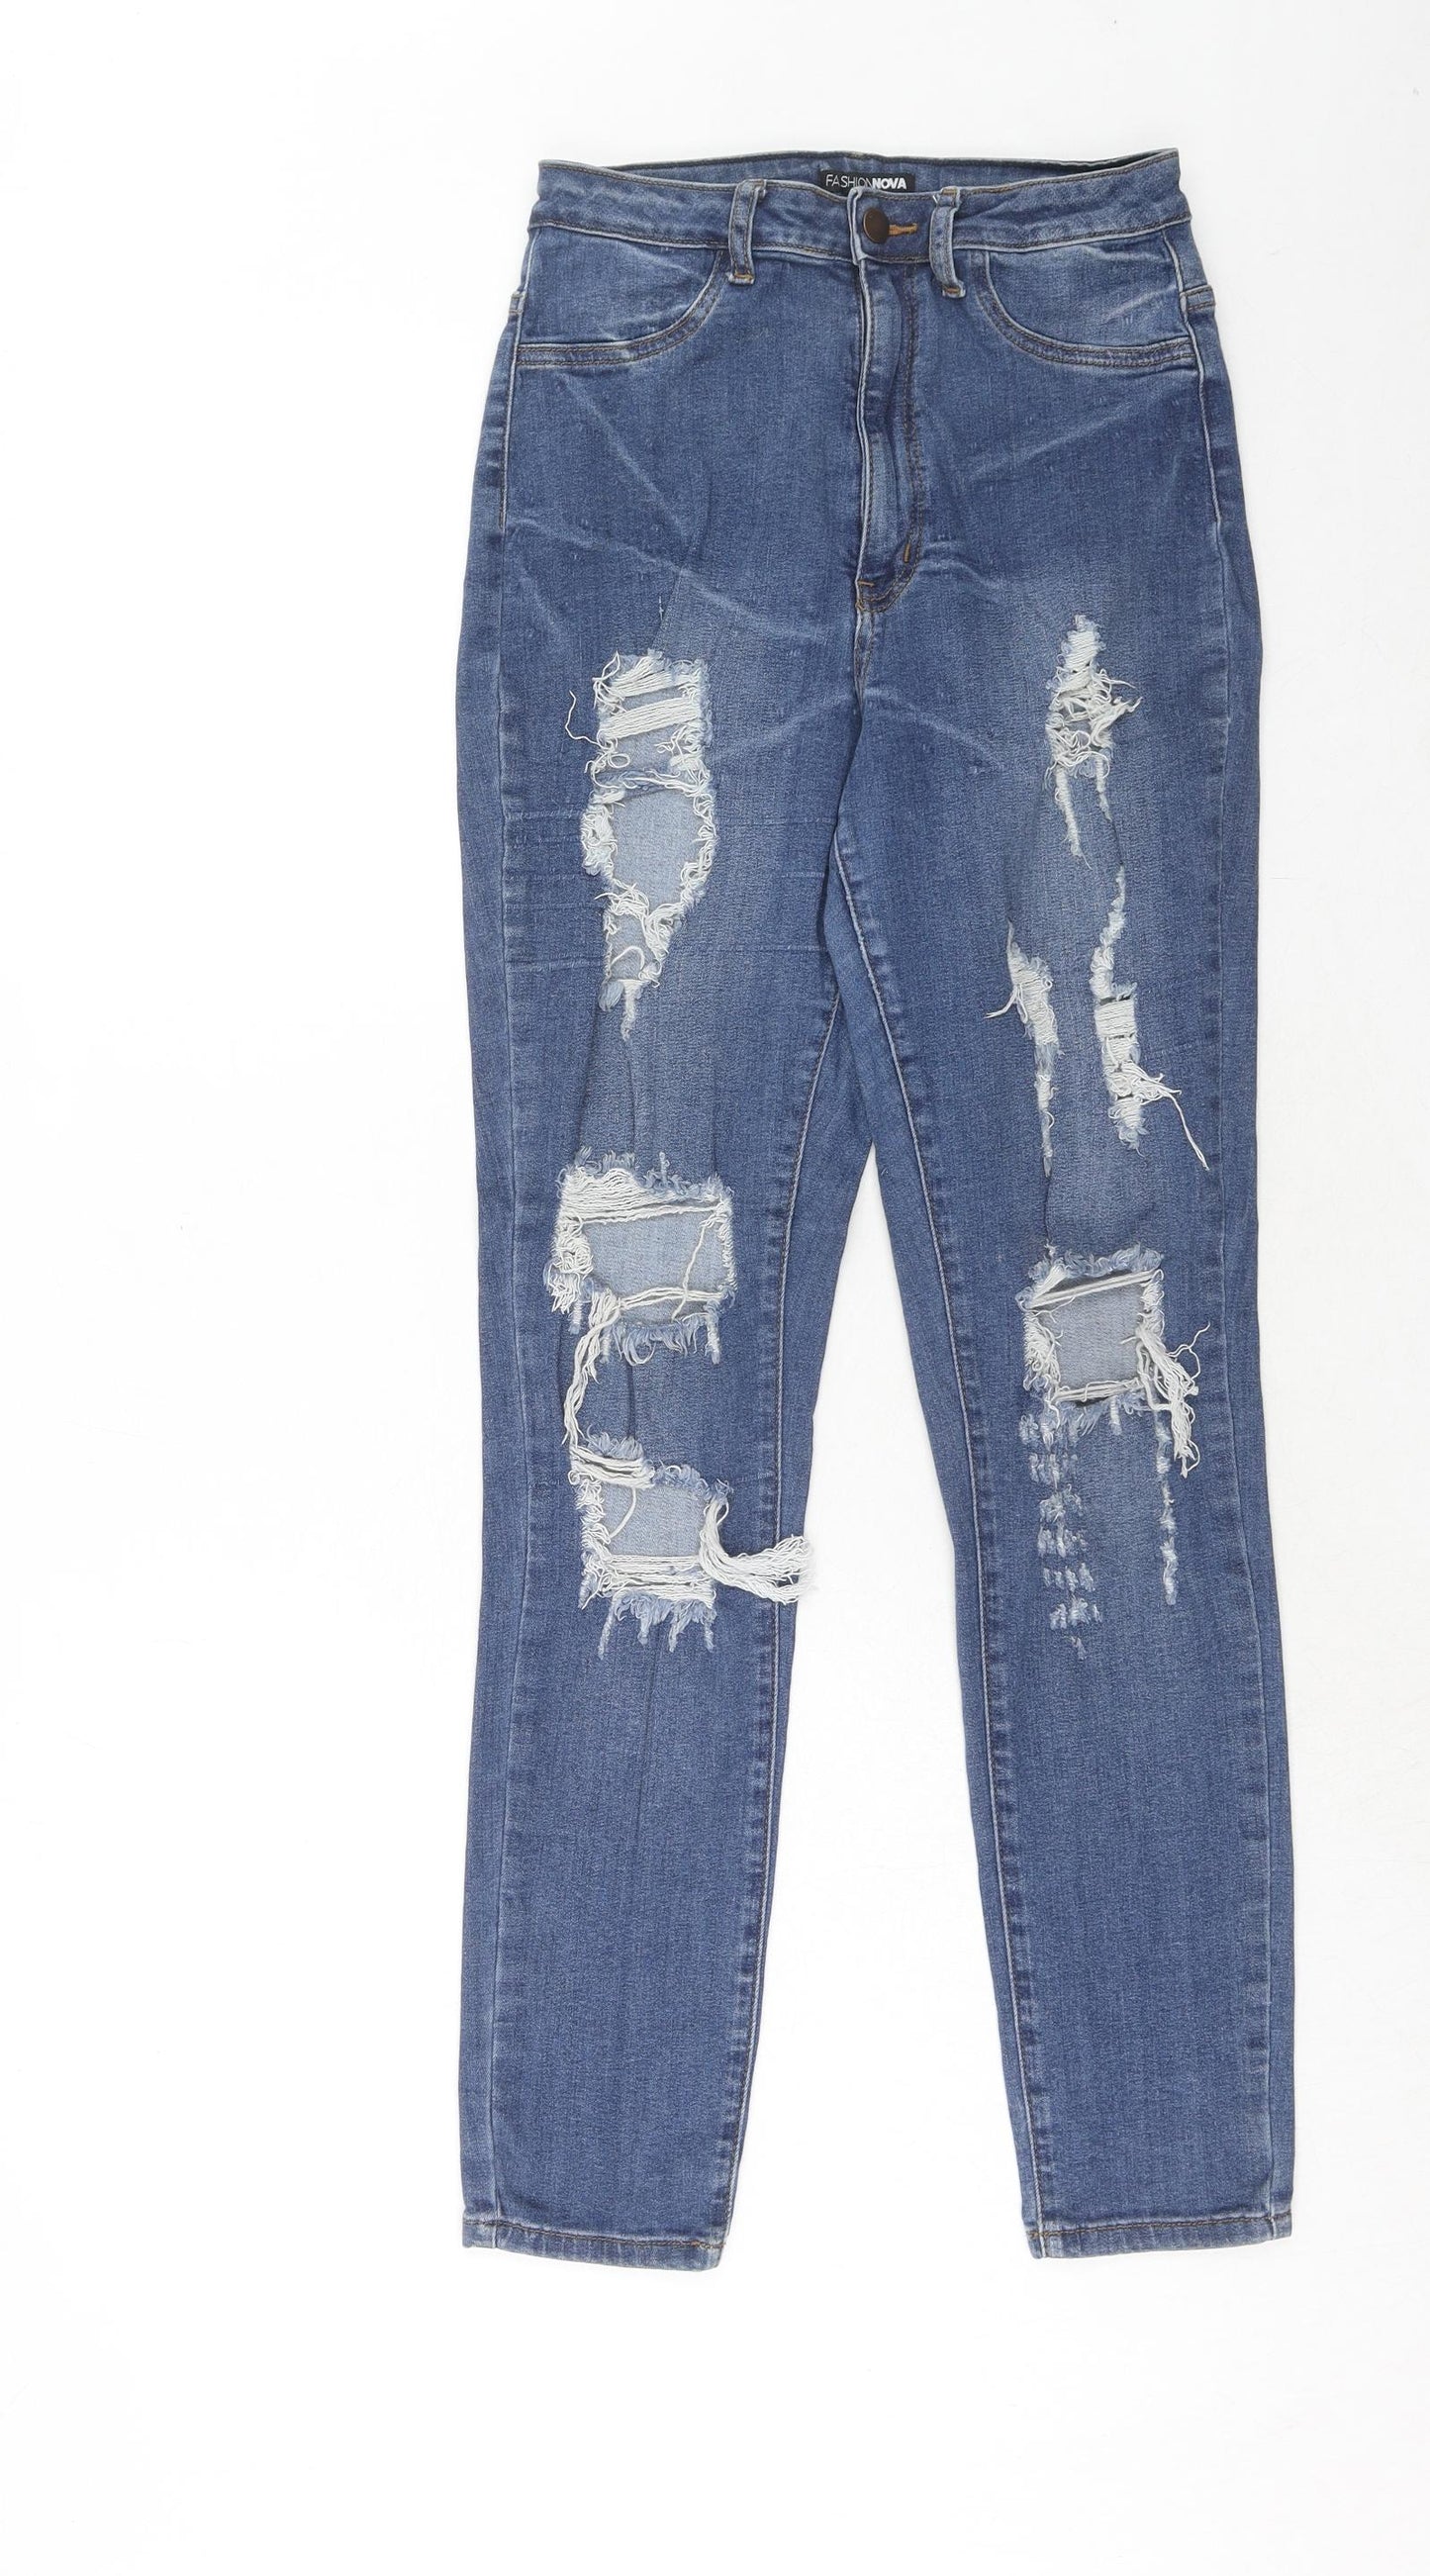 Fashion Nova Womens Blue Cotton Skinny Jeans Size 28 in Regular Zip